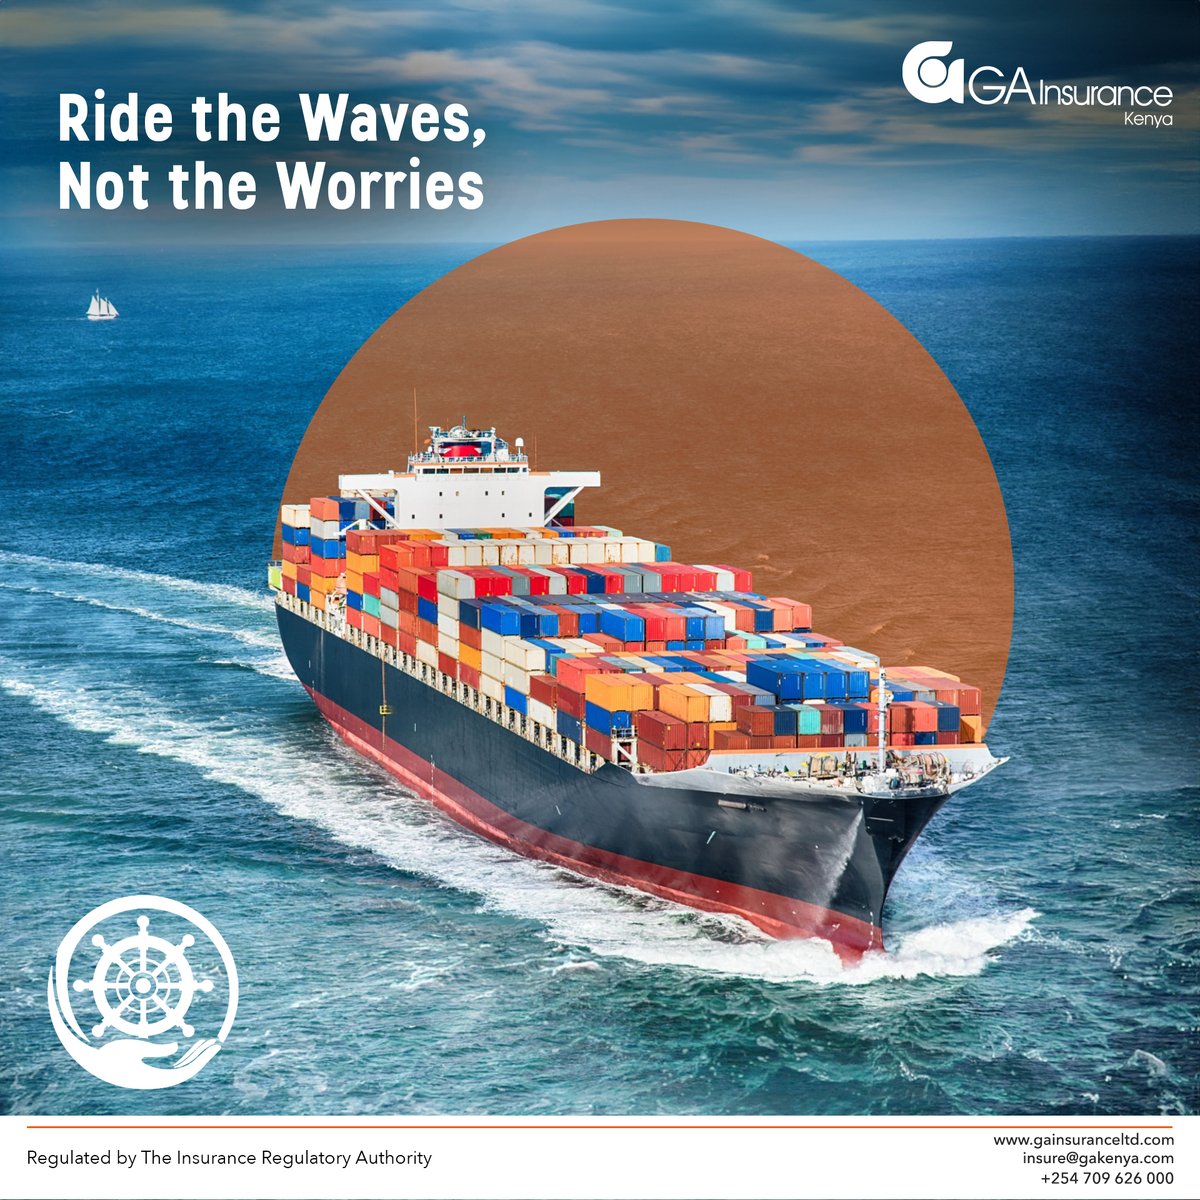 Cargo worries? #RestAssured GA Marine Insurance has you covered. We protect your shipment from dock to dock.
#GaMarine